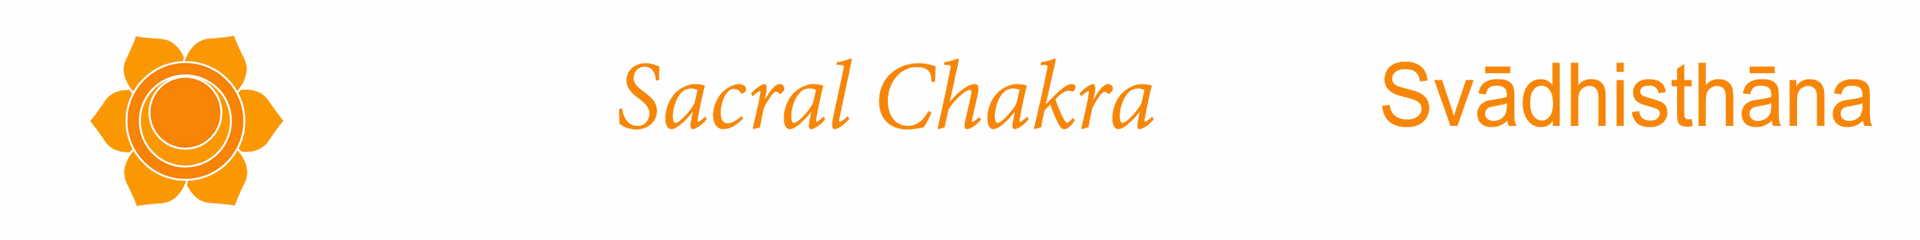 sacral chakra image